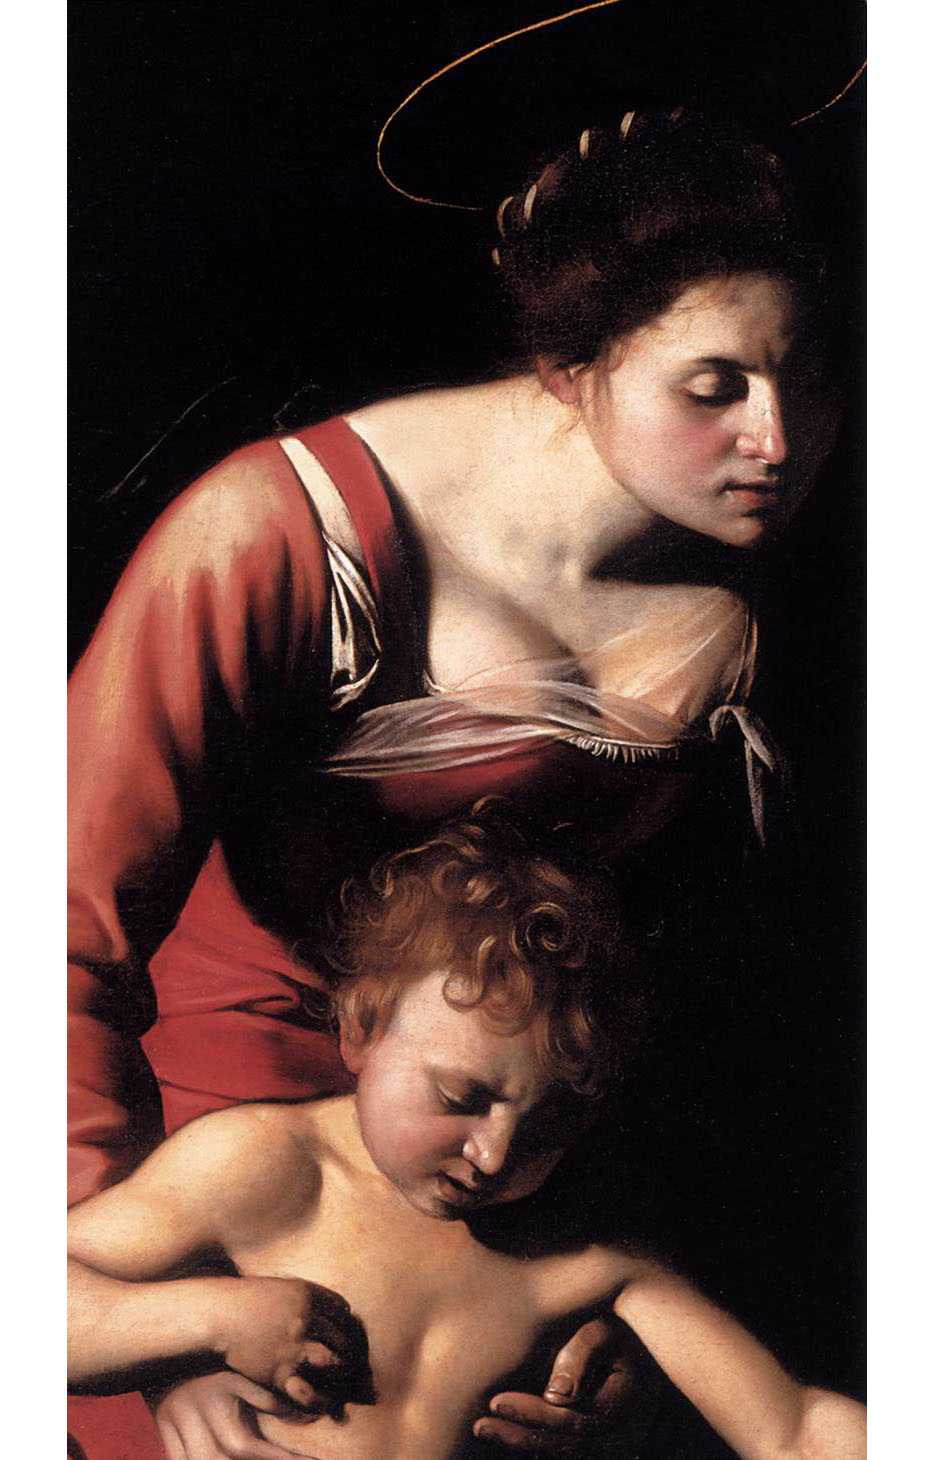 Микеланджело Мкризи да Караваджо. Мадонна со змеей". Фрагмент. 1606. Галерея Боргезе, Рим.